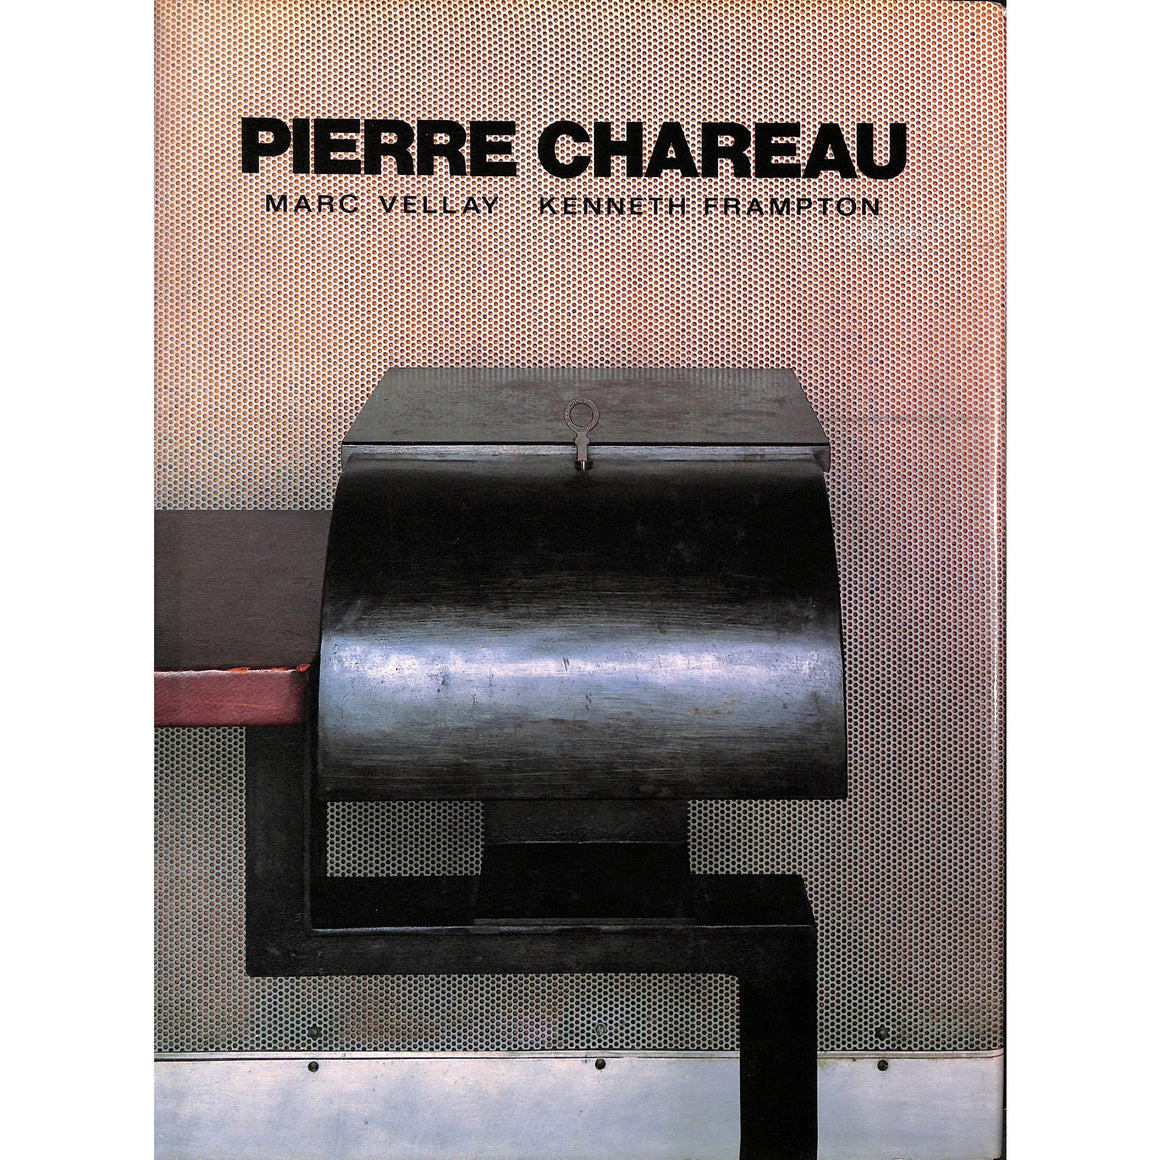 Pierre Chareau: Architect and Craftsman 1883-1950